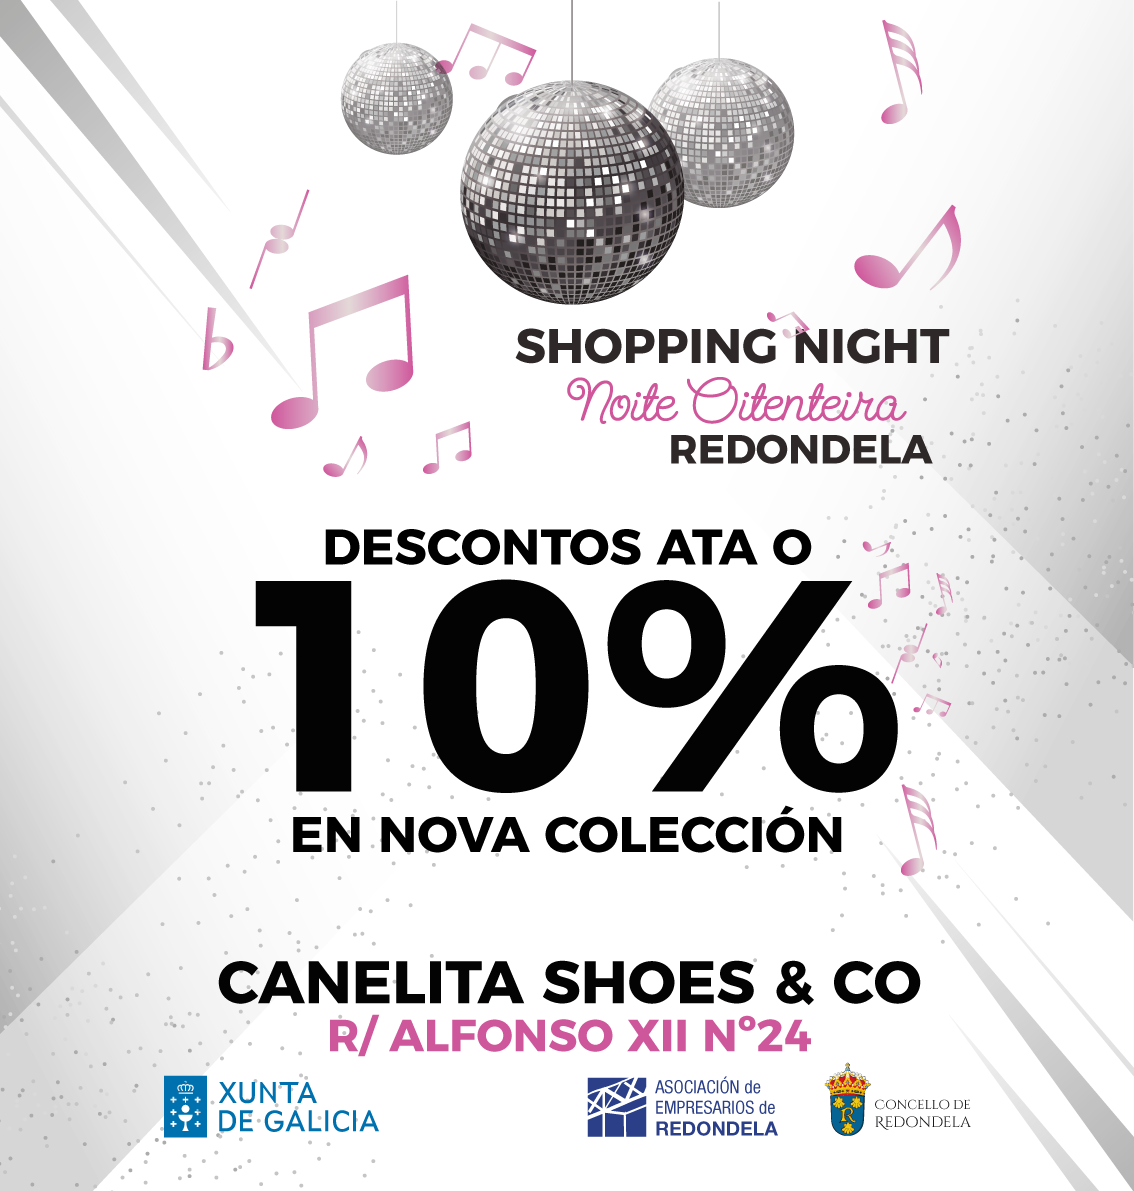 Promo_canelita_Shoes_2.png